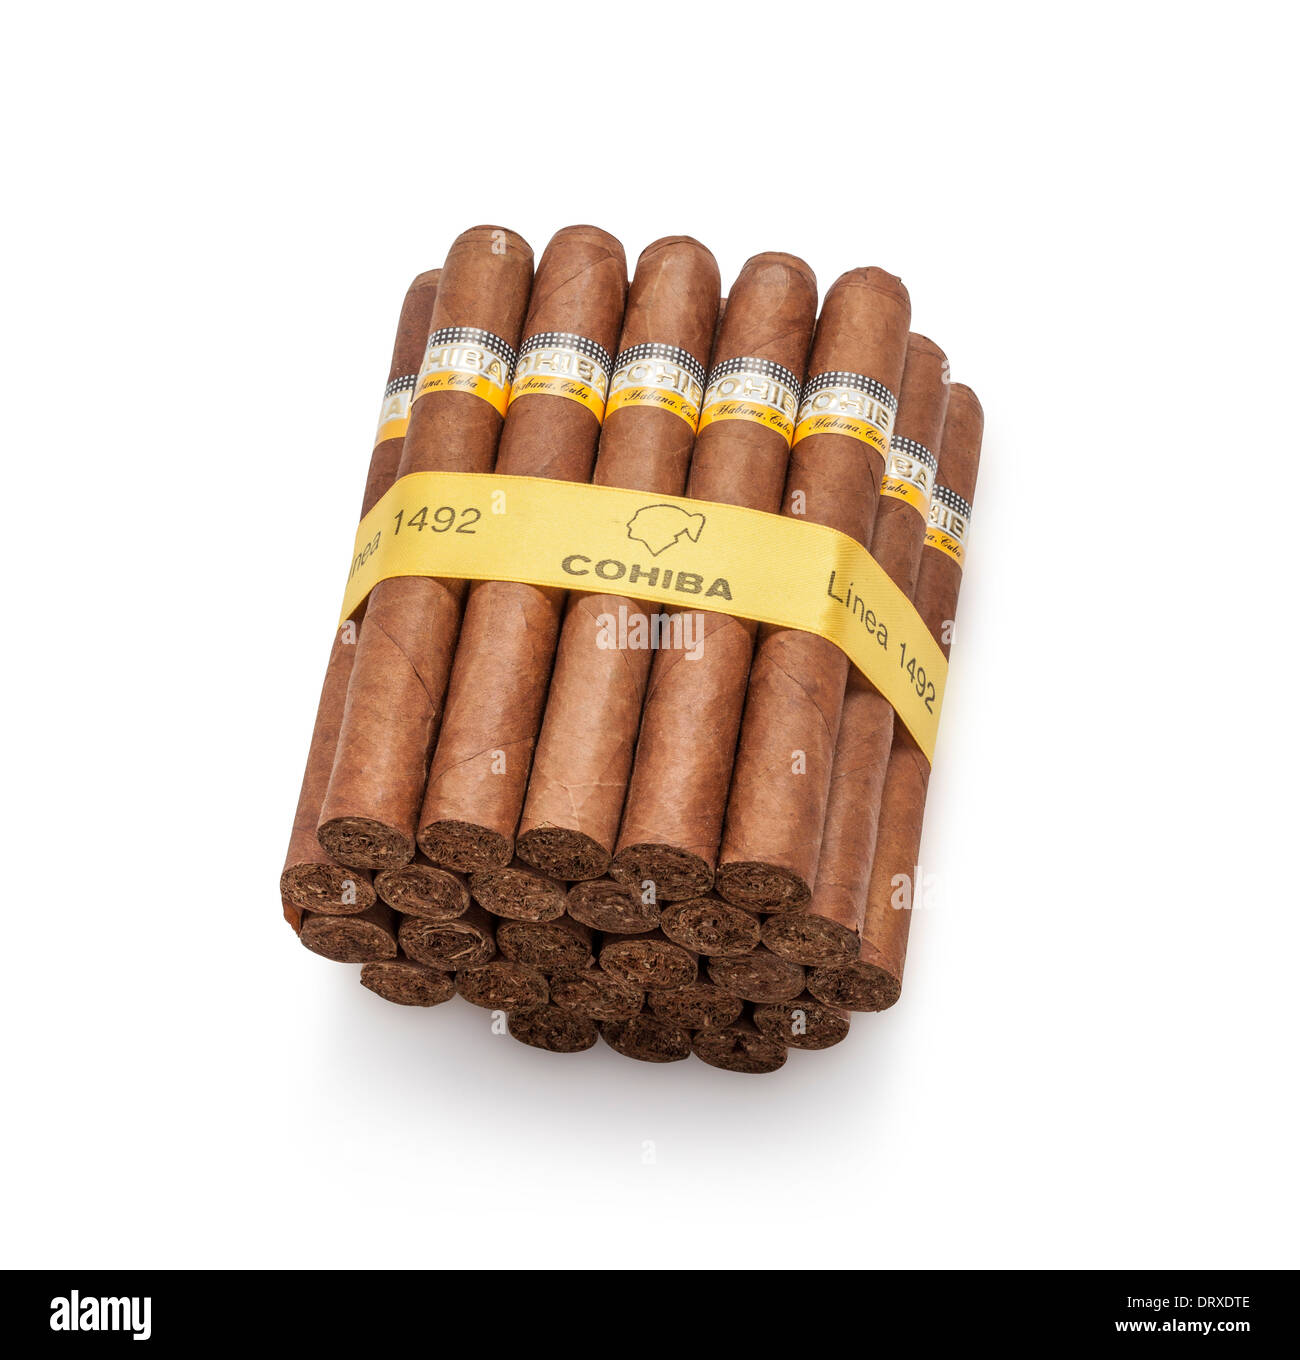 Cohiba linea 1492 cigare cubain Banque D'Images